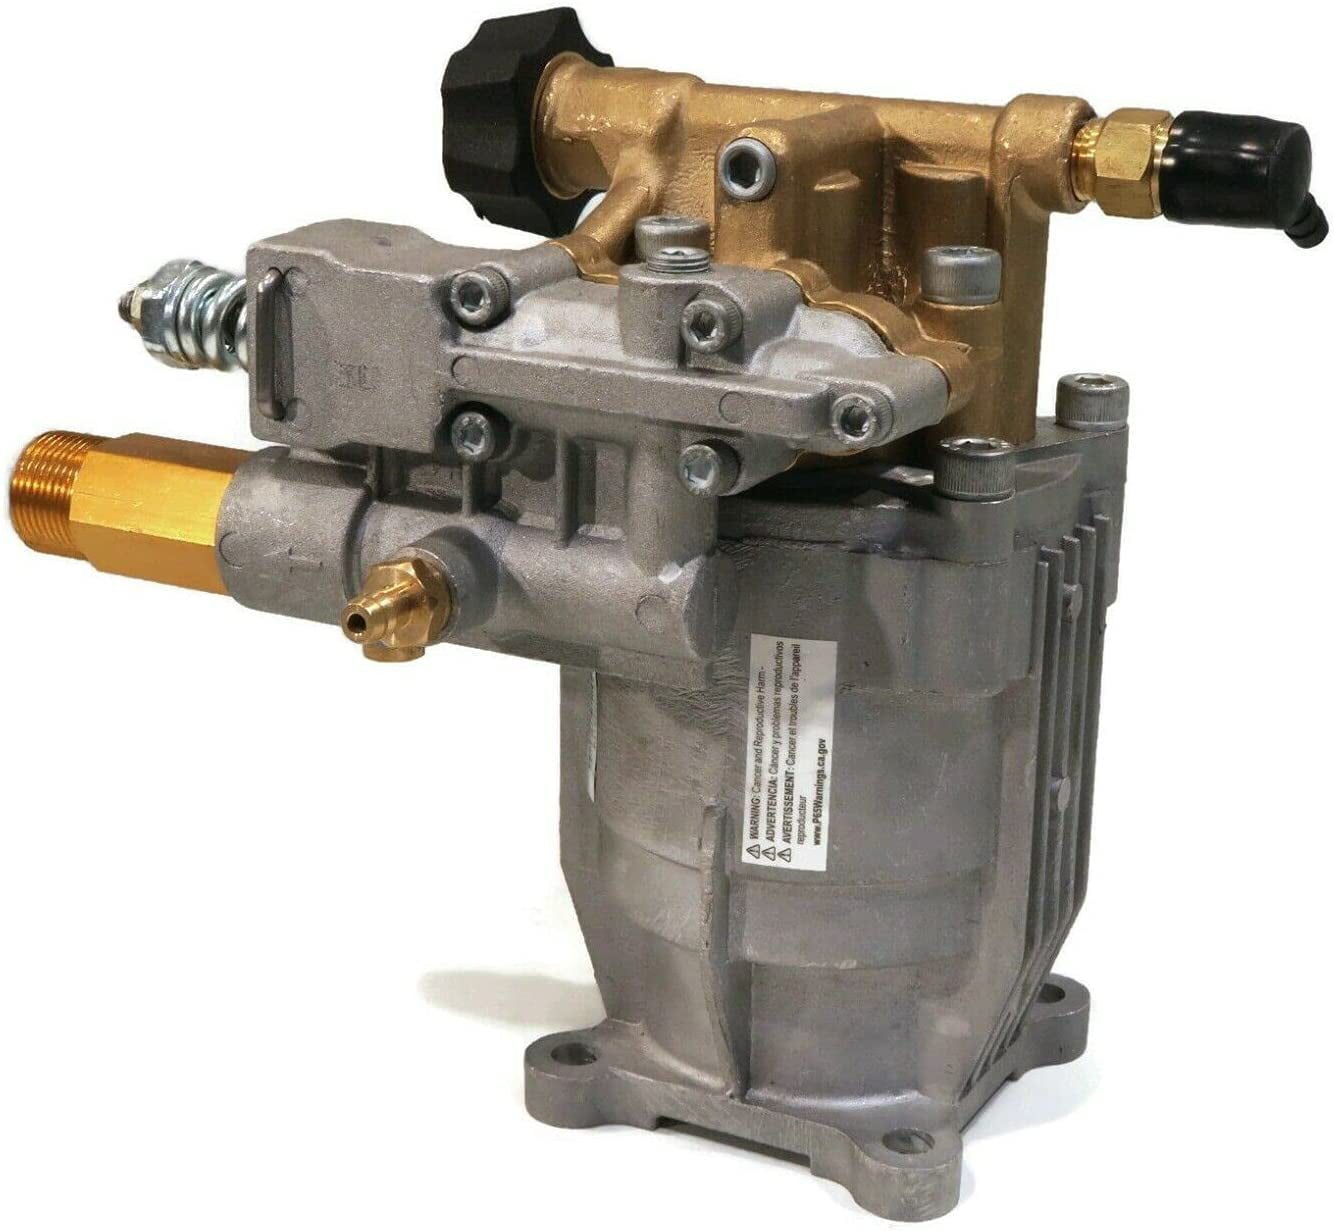 3000 psi PRESSURE WASHER PUMP W/ HARDWARE for Sears Craftsman 580.767300 1545-0 